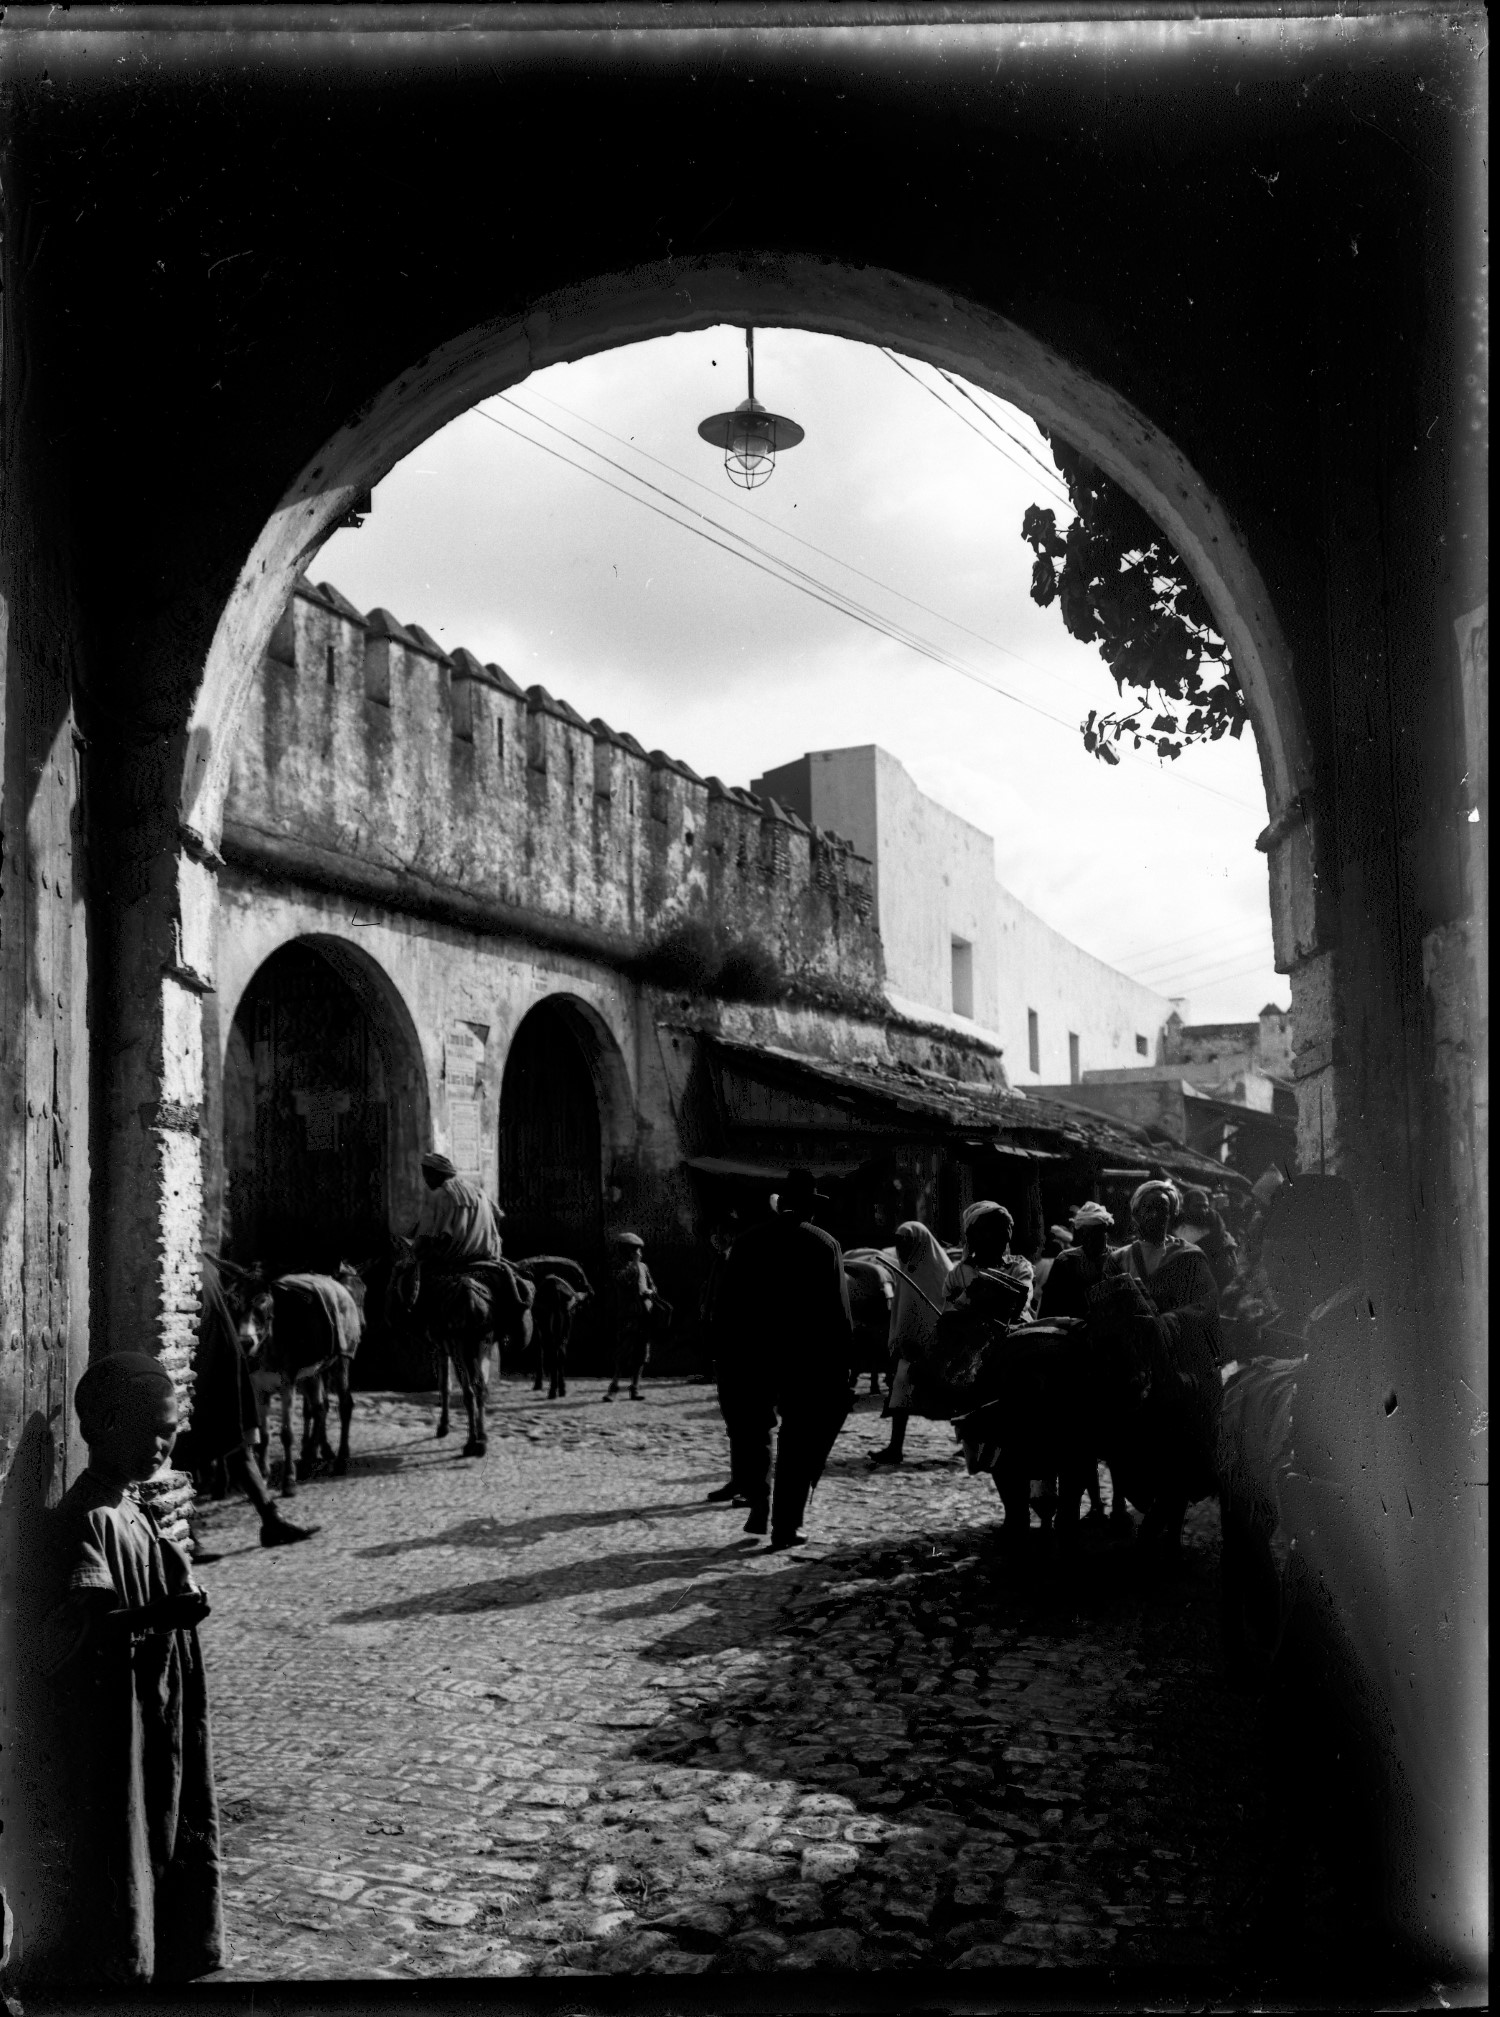 Les Deux Portes - People and donkeys in Medina doorway 